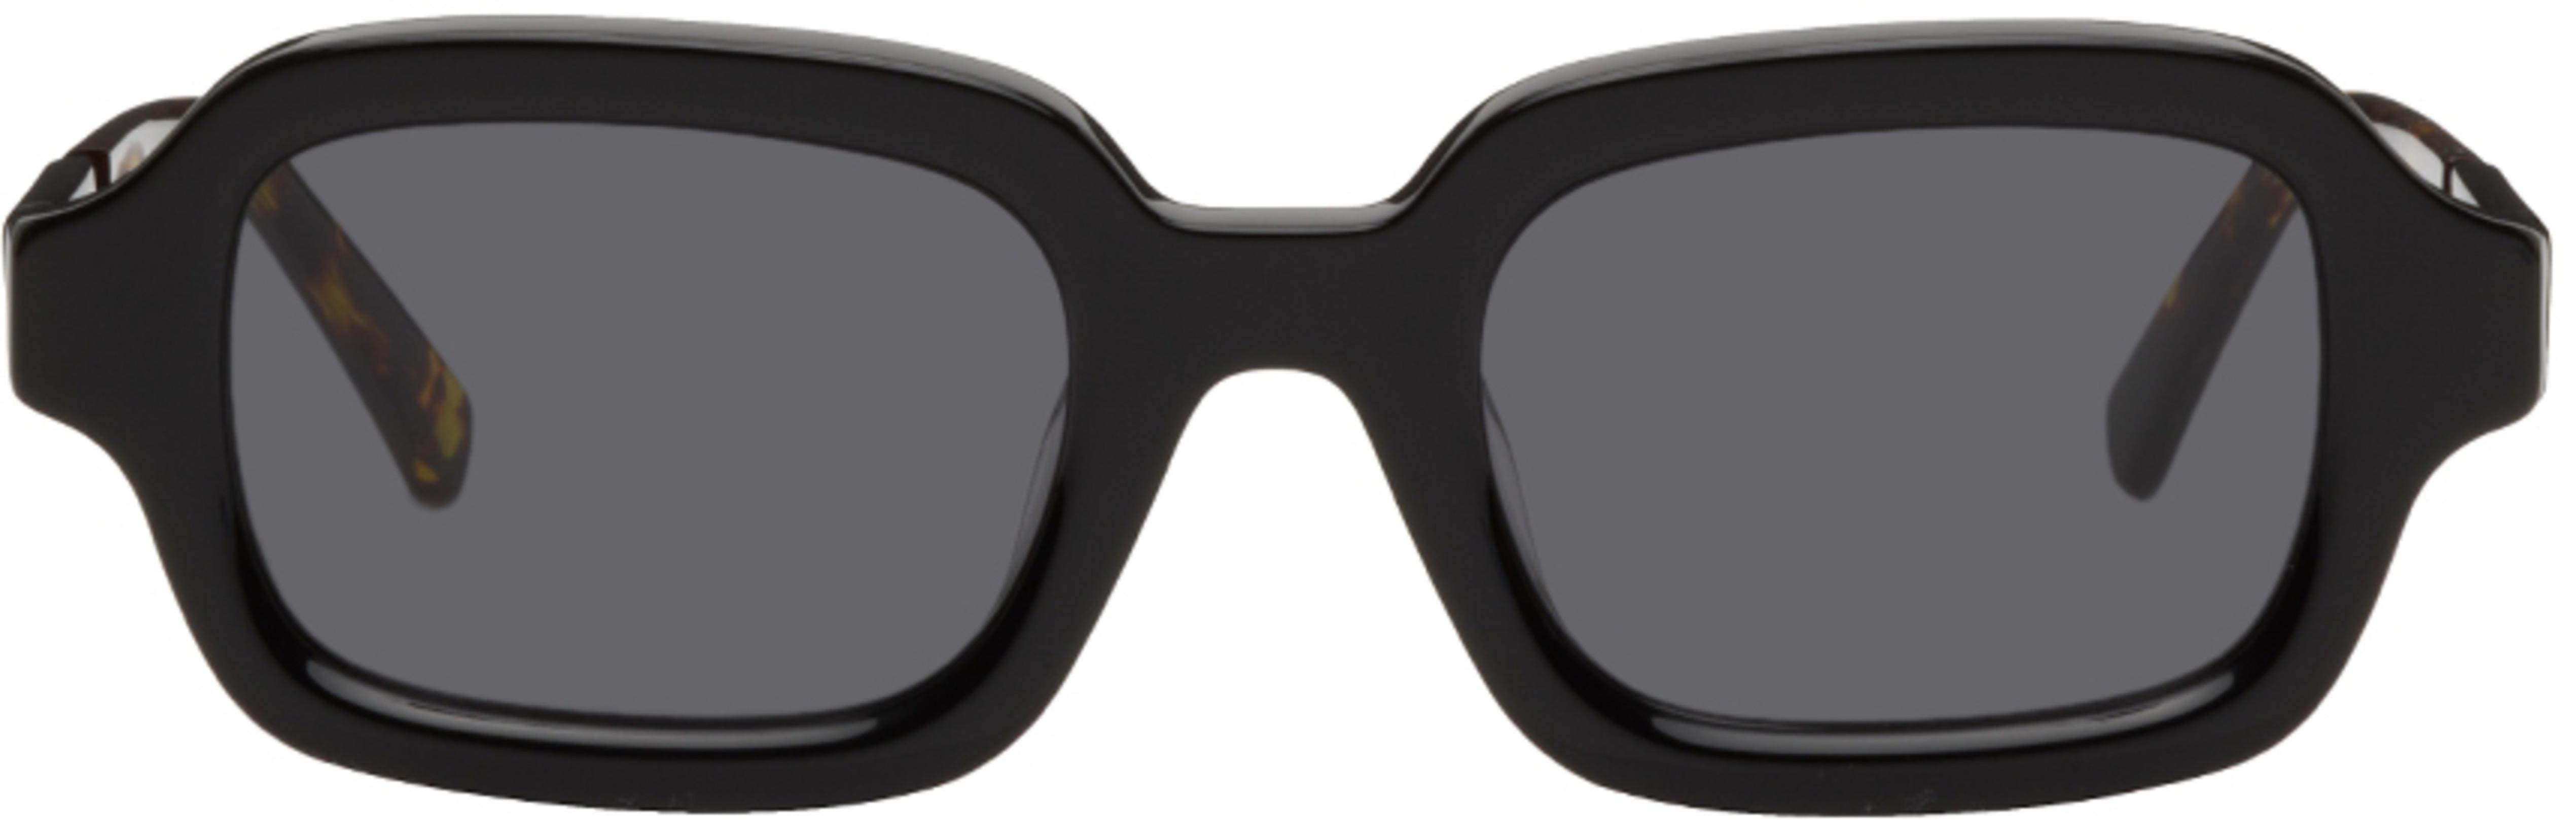 Black Shy Guy Sunglasses by BONNIE CLYDE